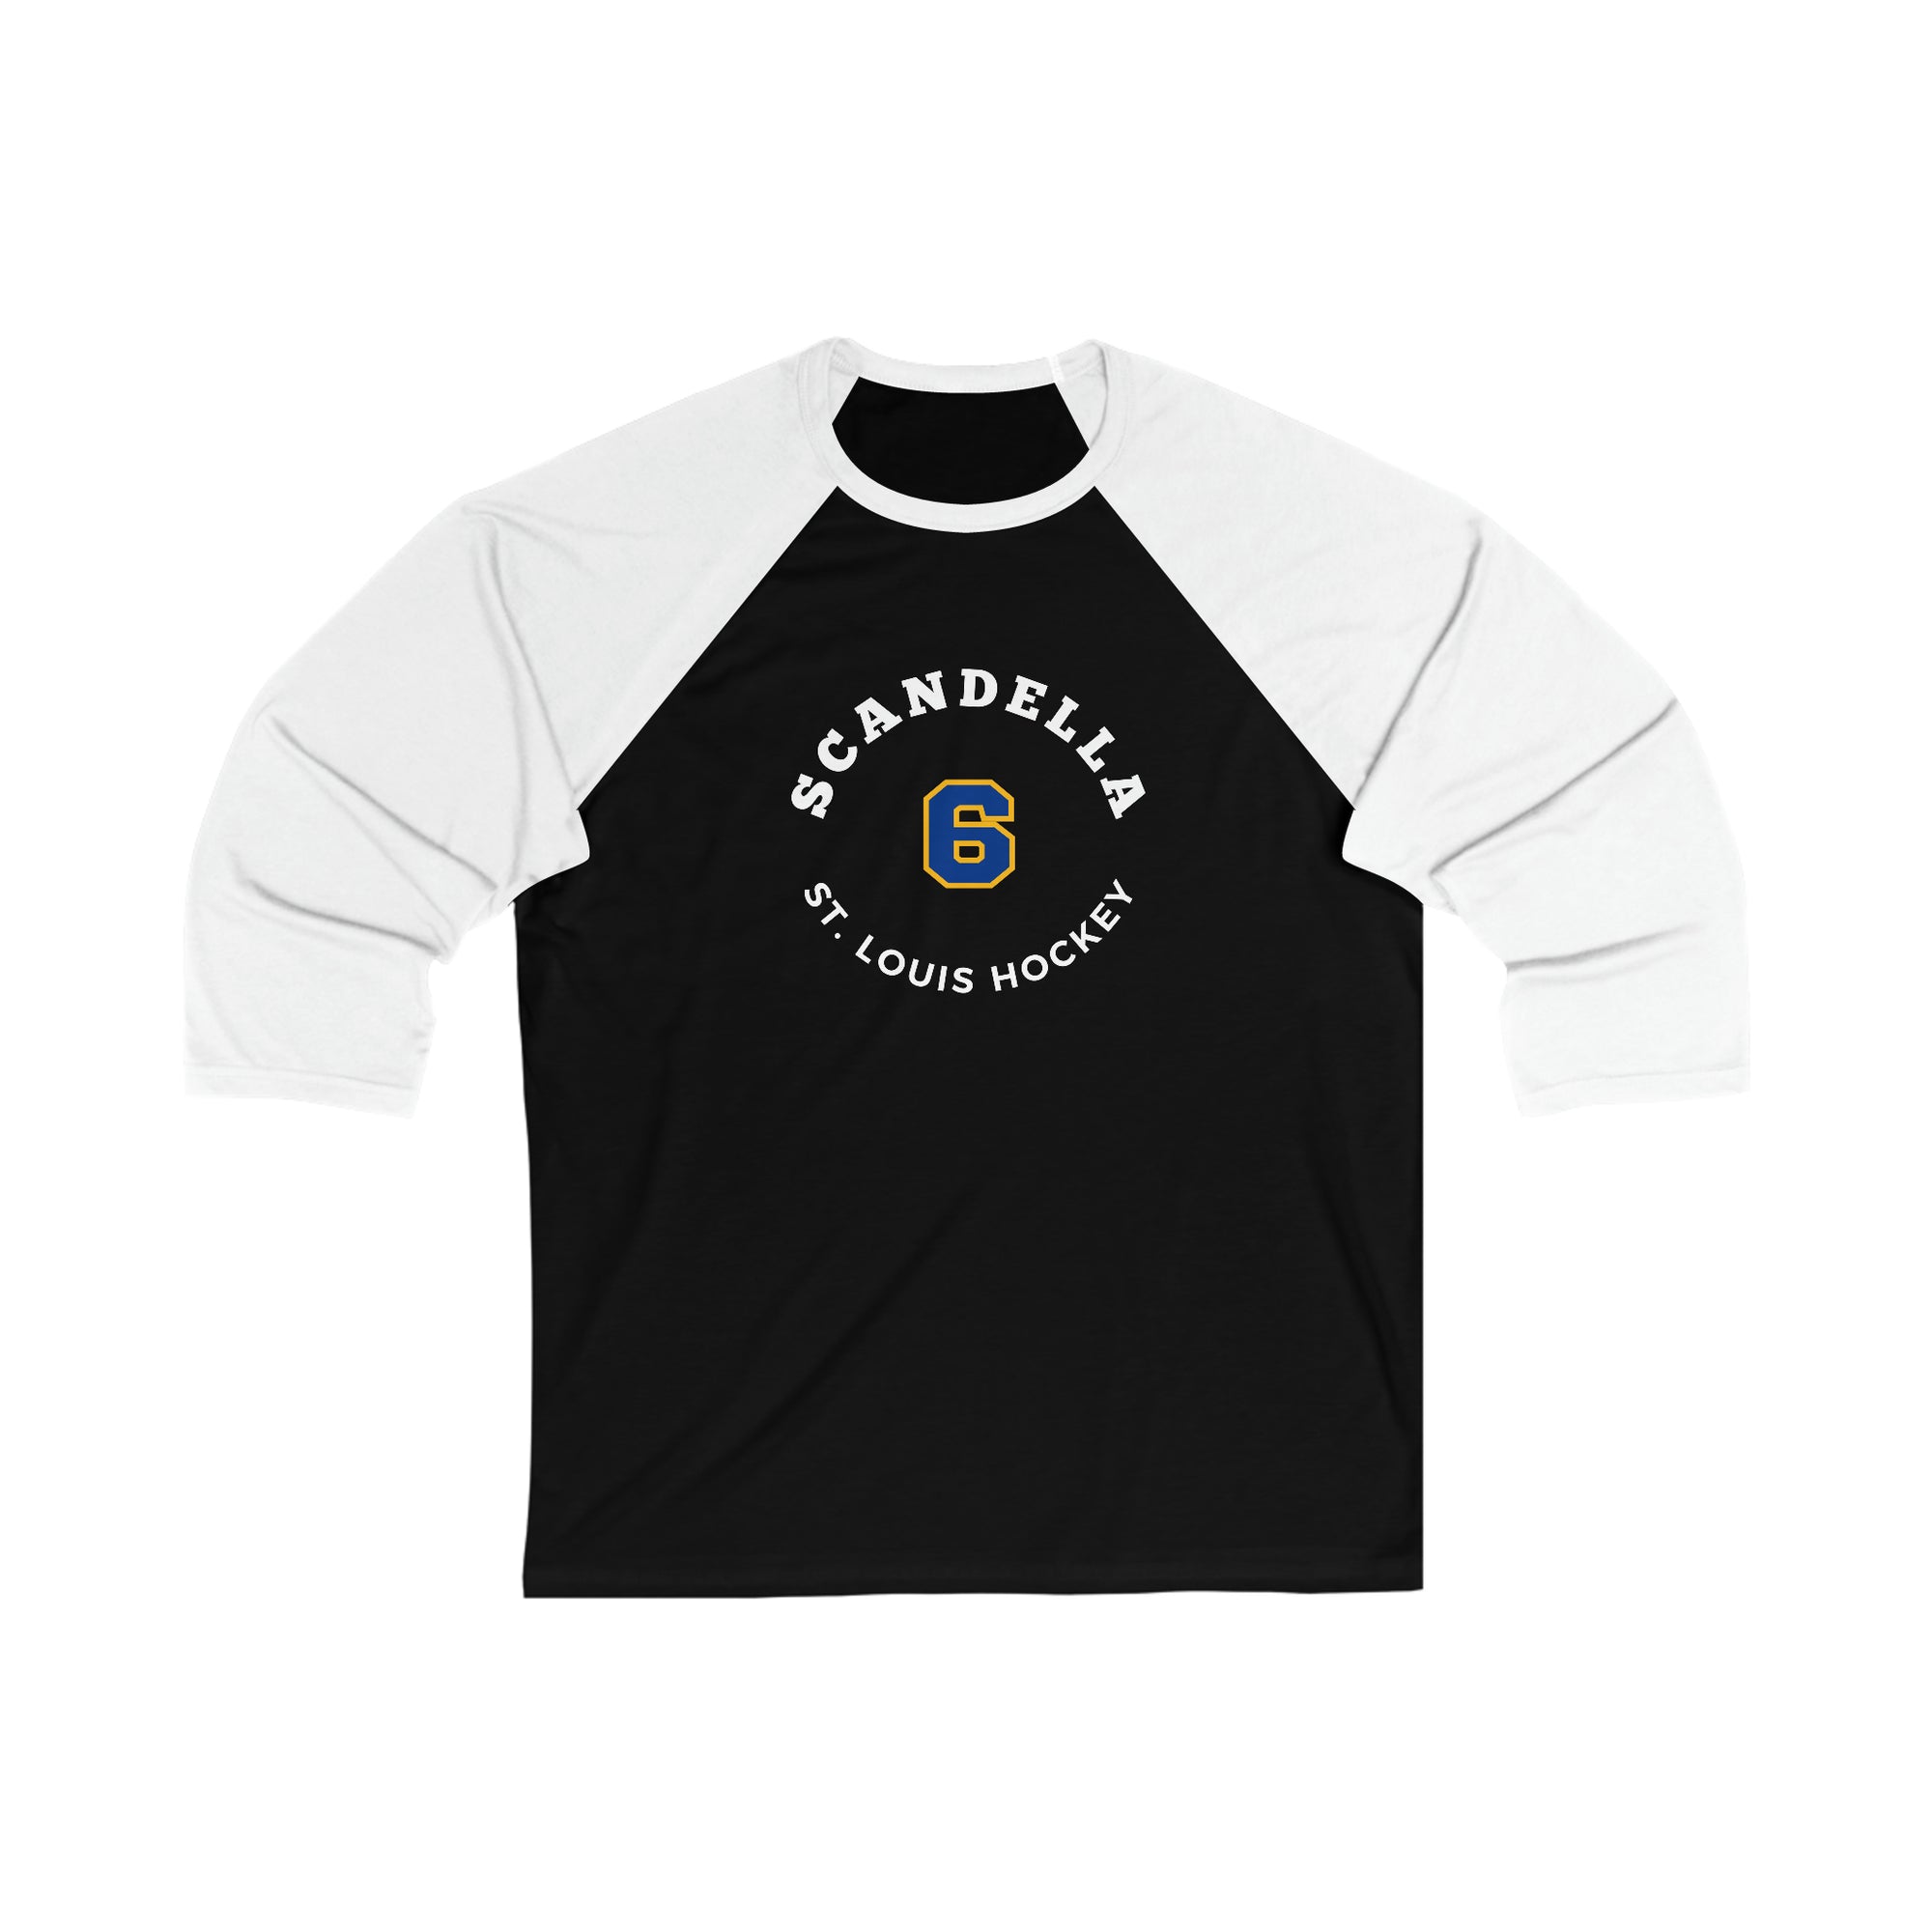 Scandella 6 St. Louis Hockey Number Arch Design Unisex Tri-Blend 3/4 Sleeve Raglan Baseball Shirt